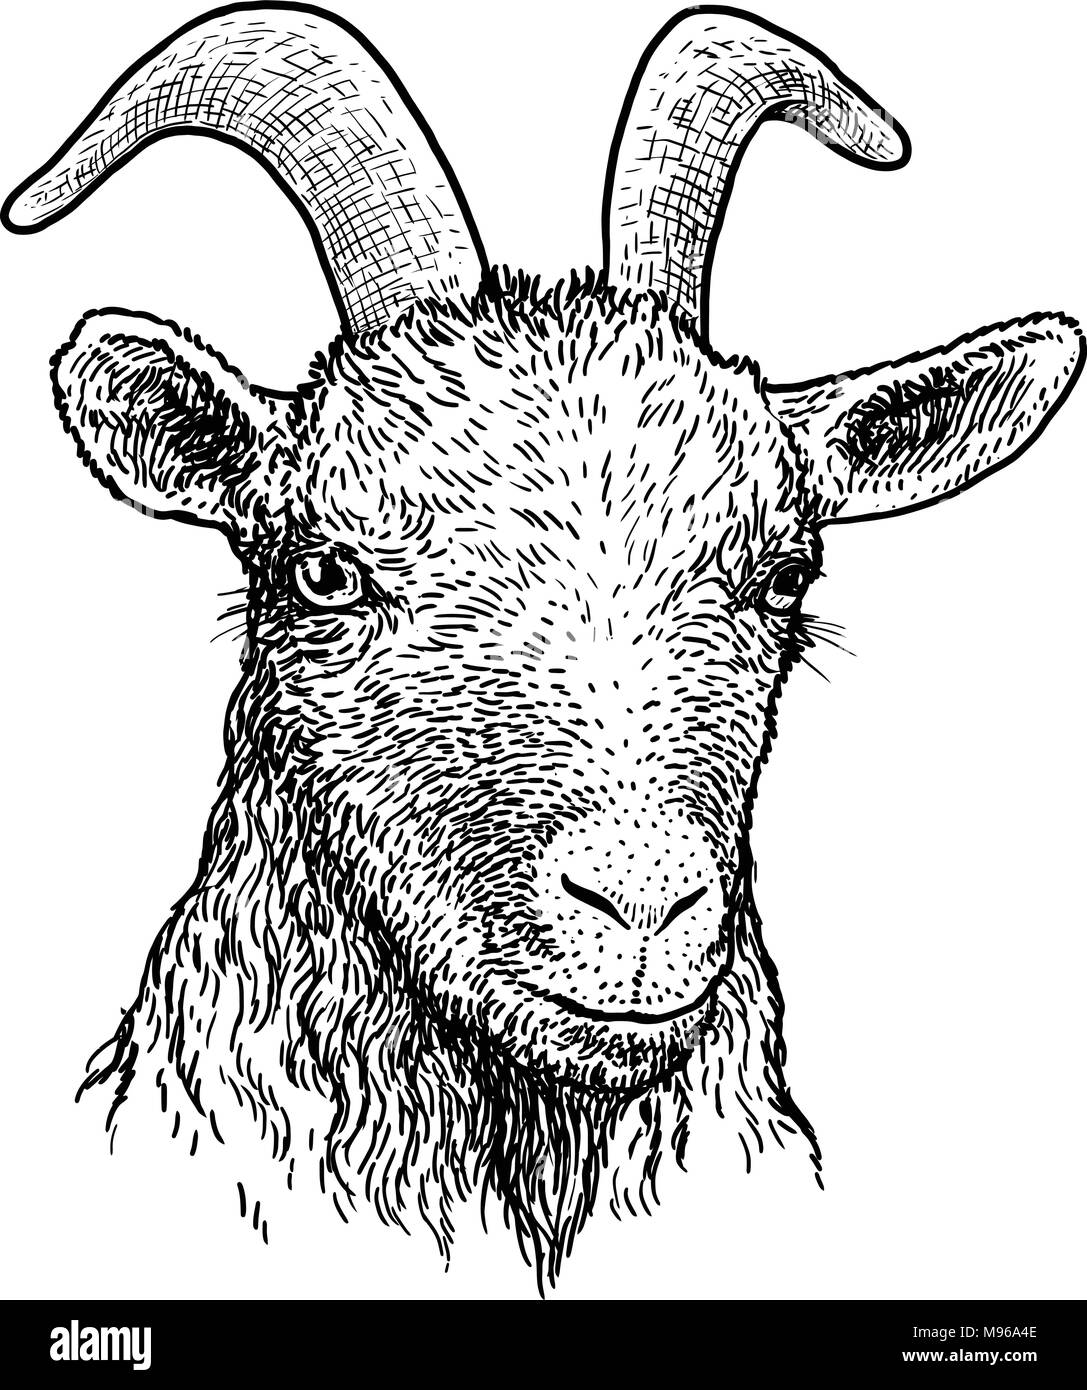 Goat head portrait illustration, drawing, engraving, ink, line art, vector Stock Vector